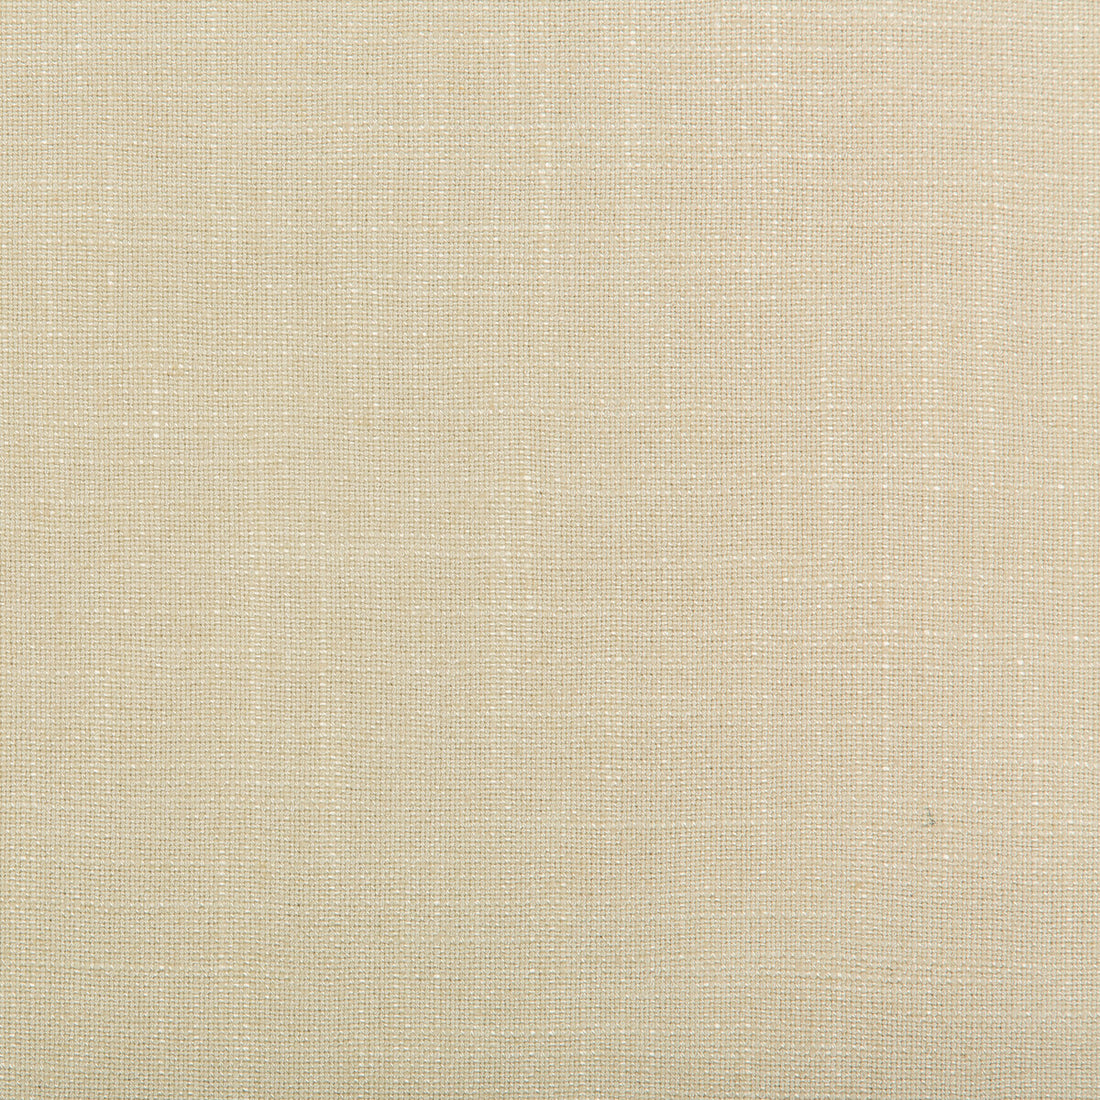 Aura fabric in tusk color - pattern 35520.116.0 - by Kravet Design